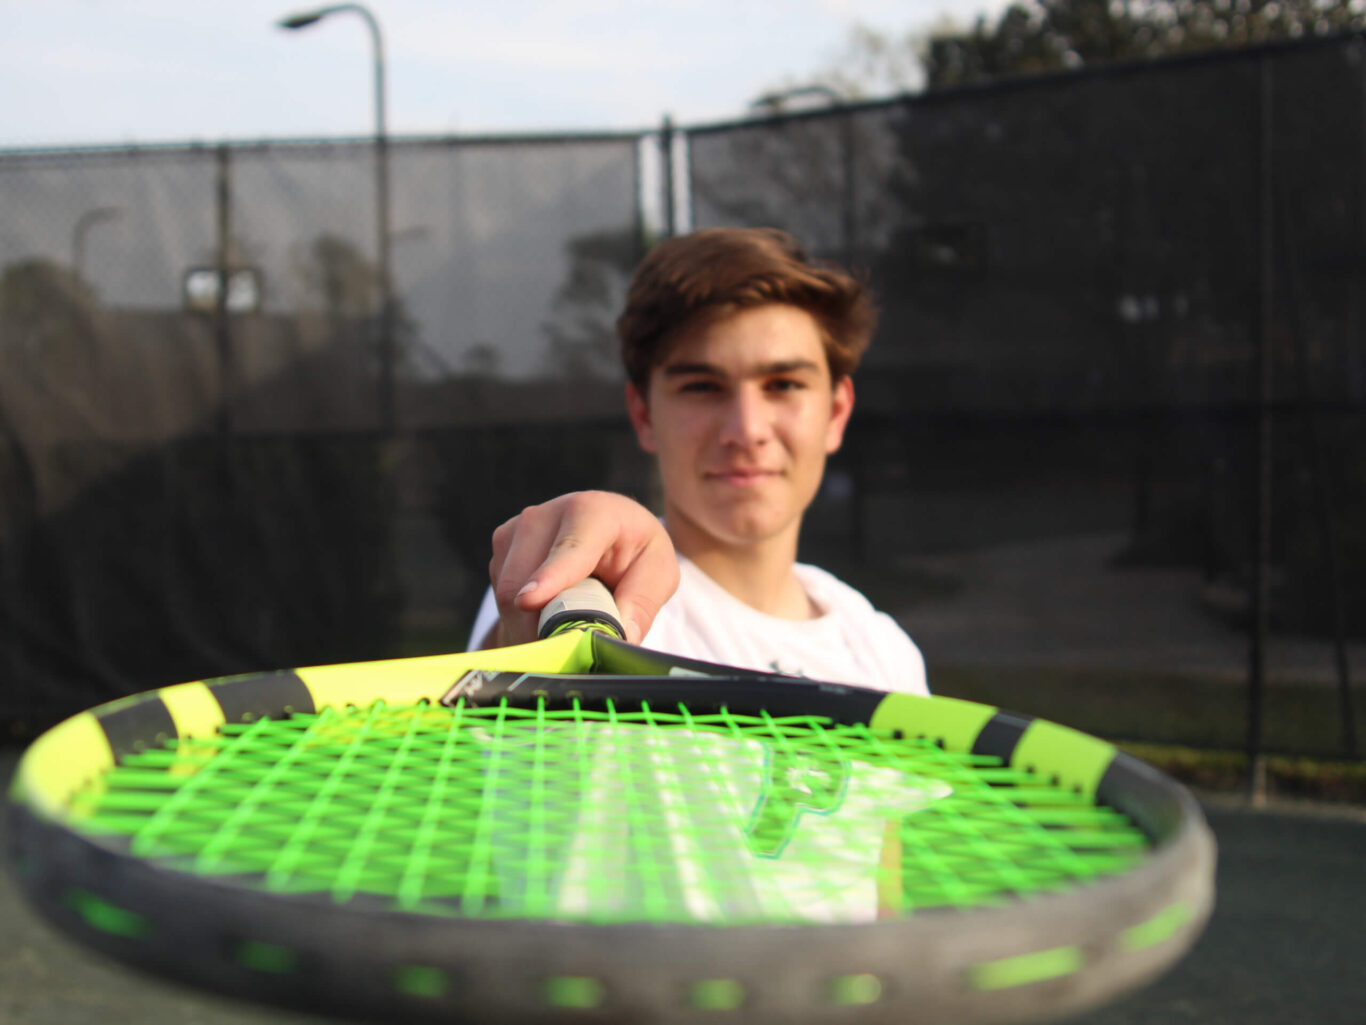 A boy holding a tennis racket.